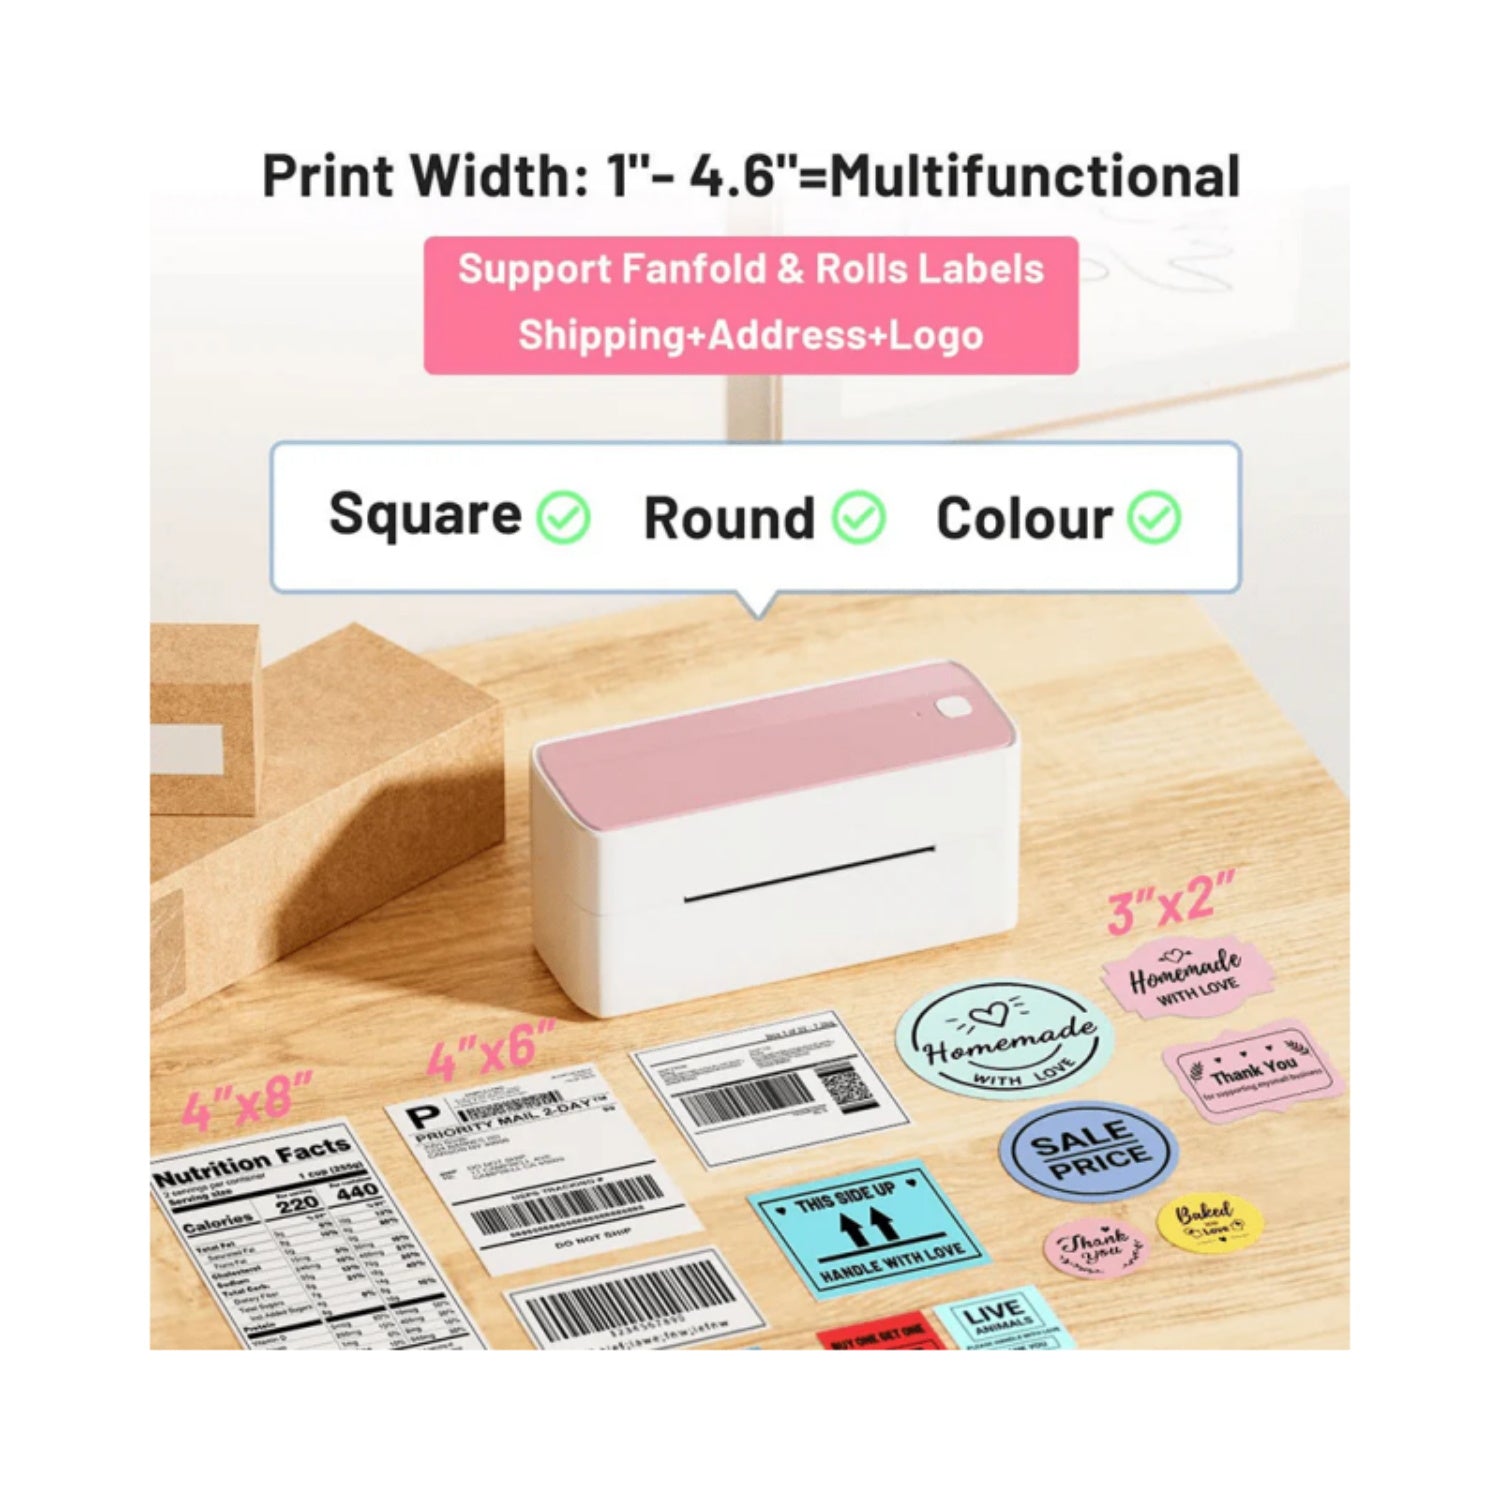 Phomemo PM-241-BT Bluetooth Shipping Label Printer